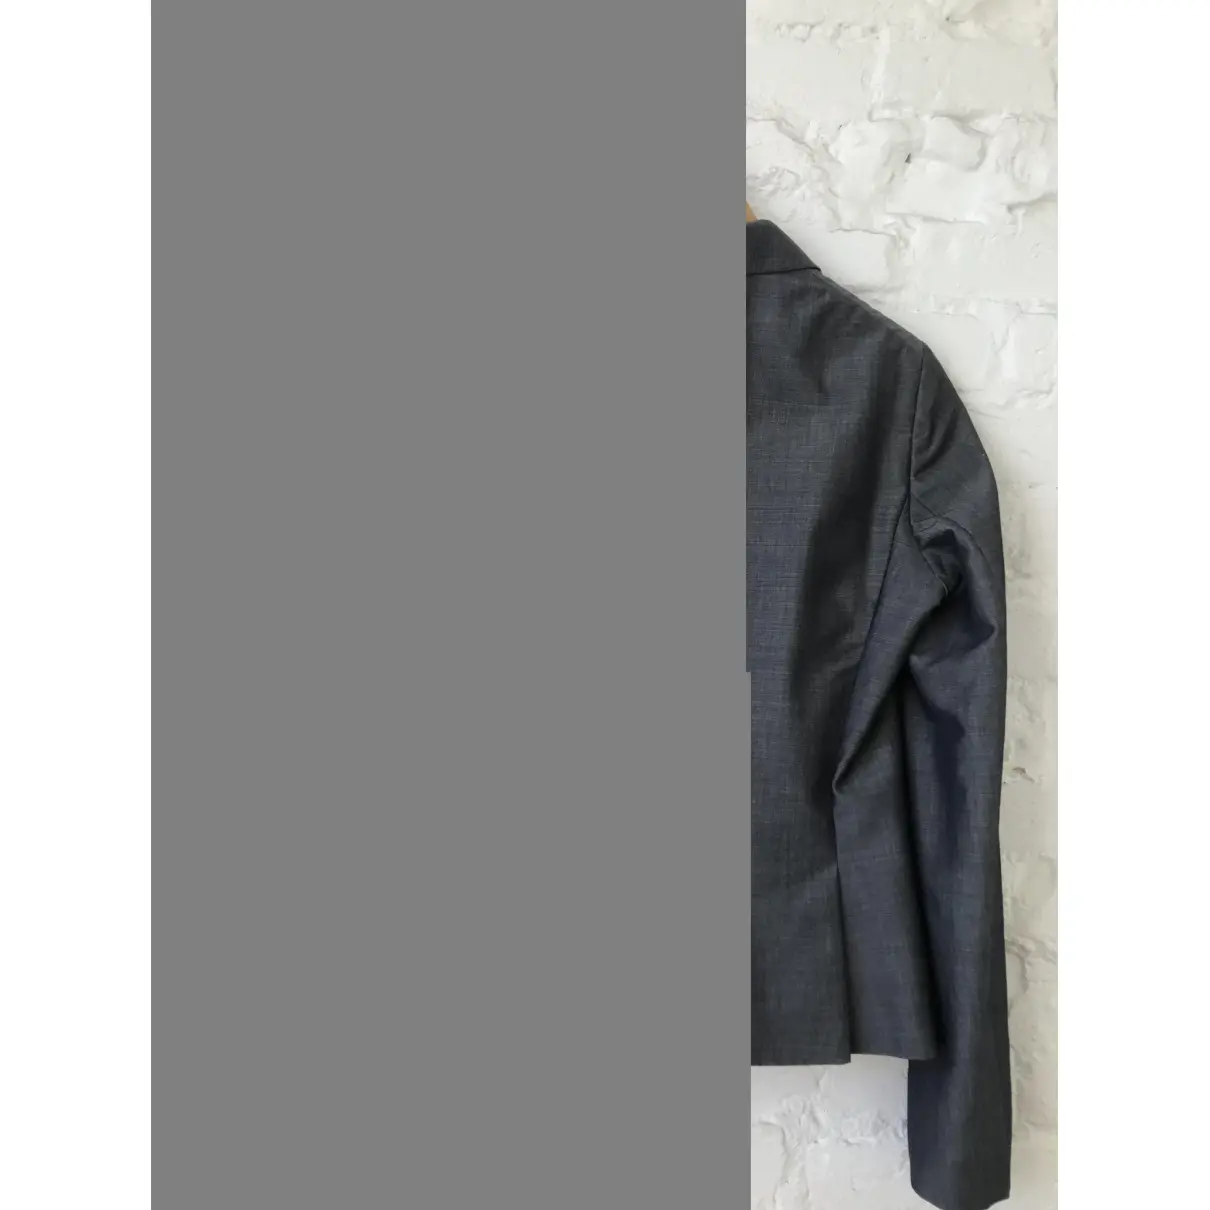 Buy Hugo Boss Wool suit jacket online